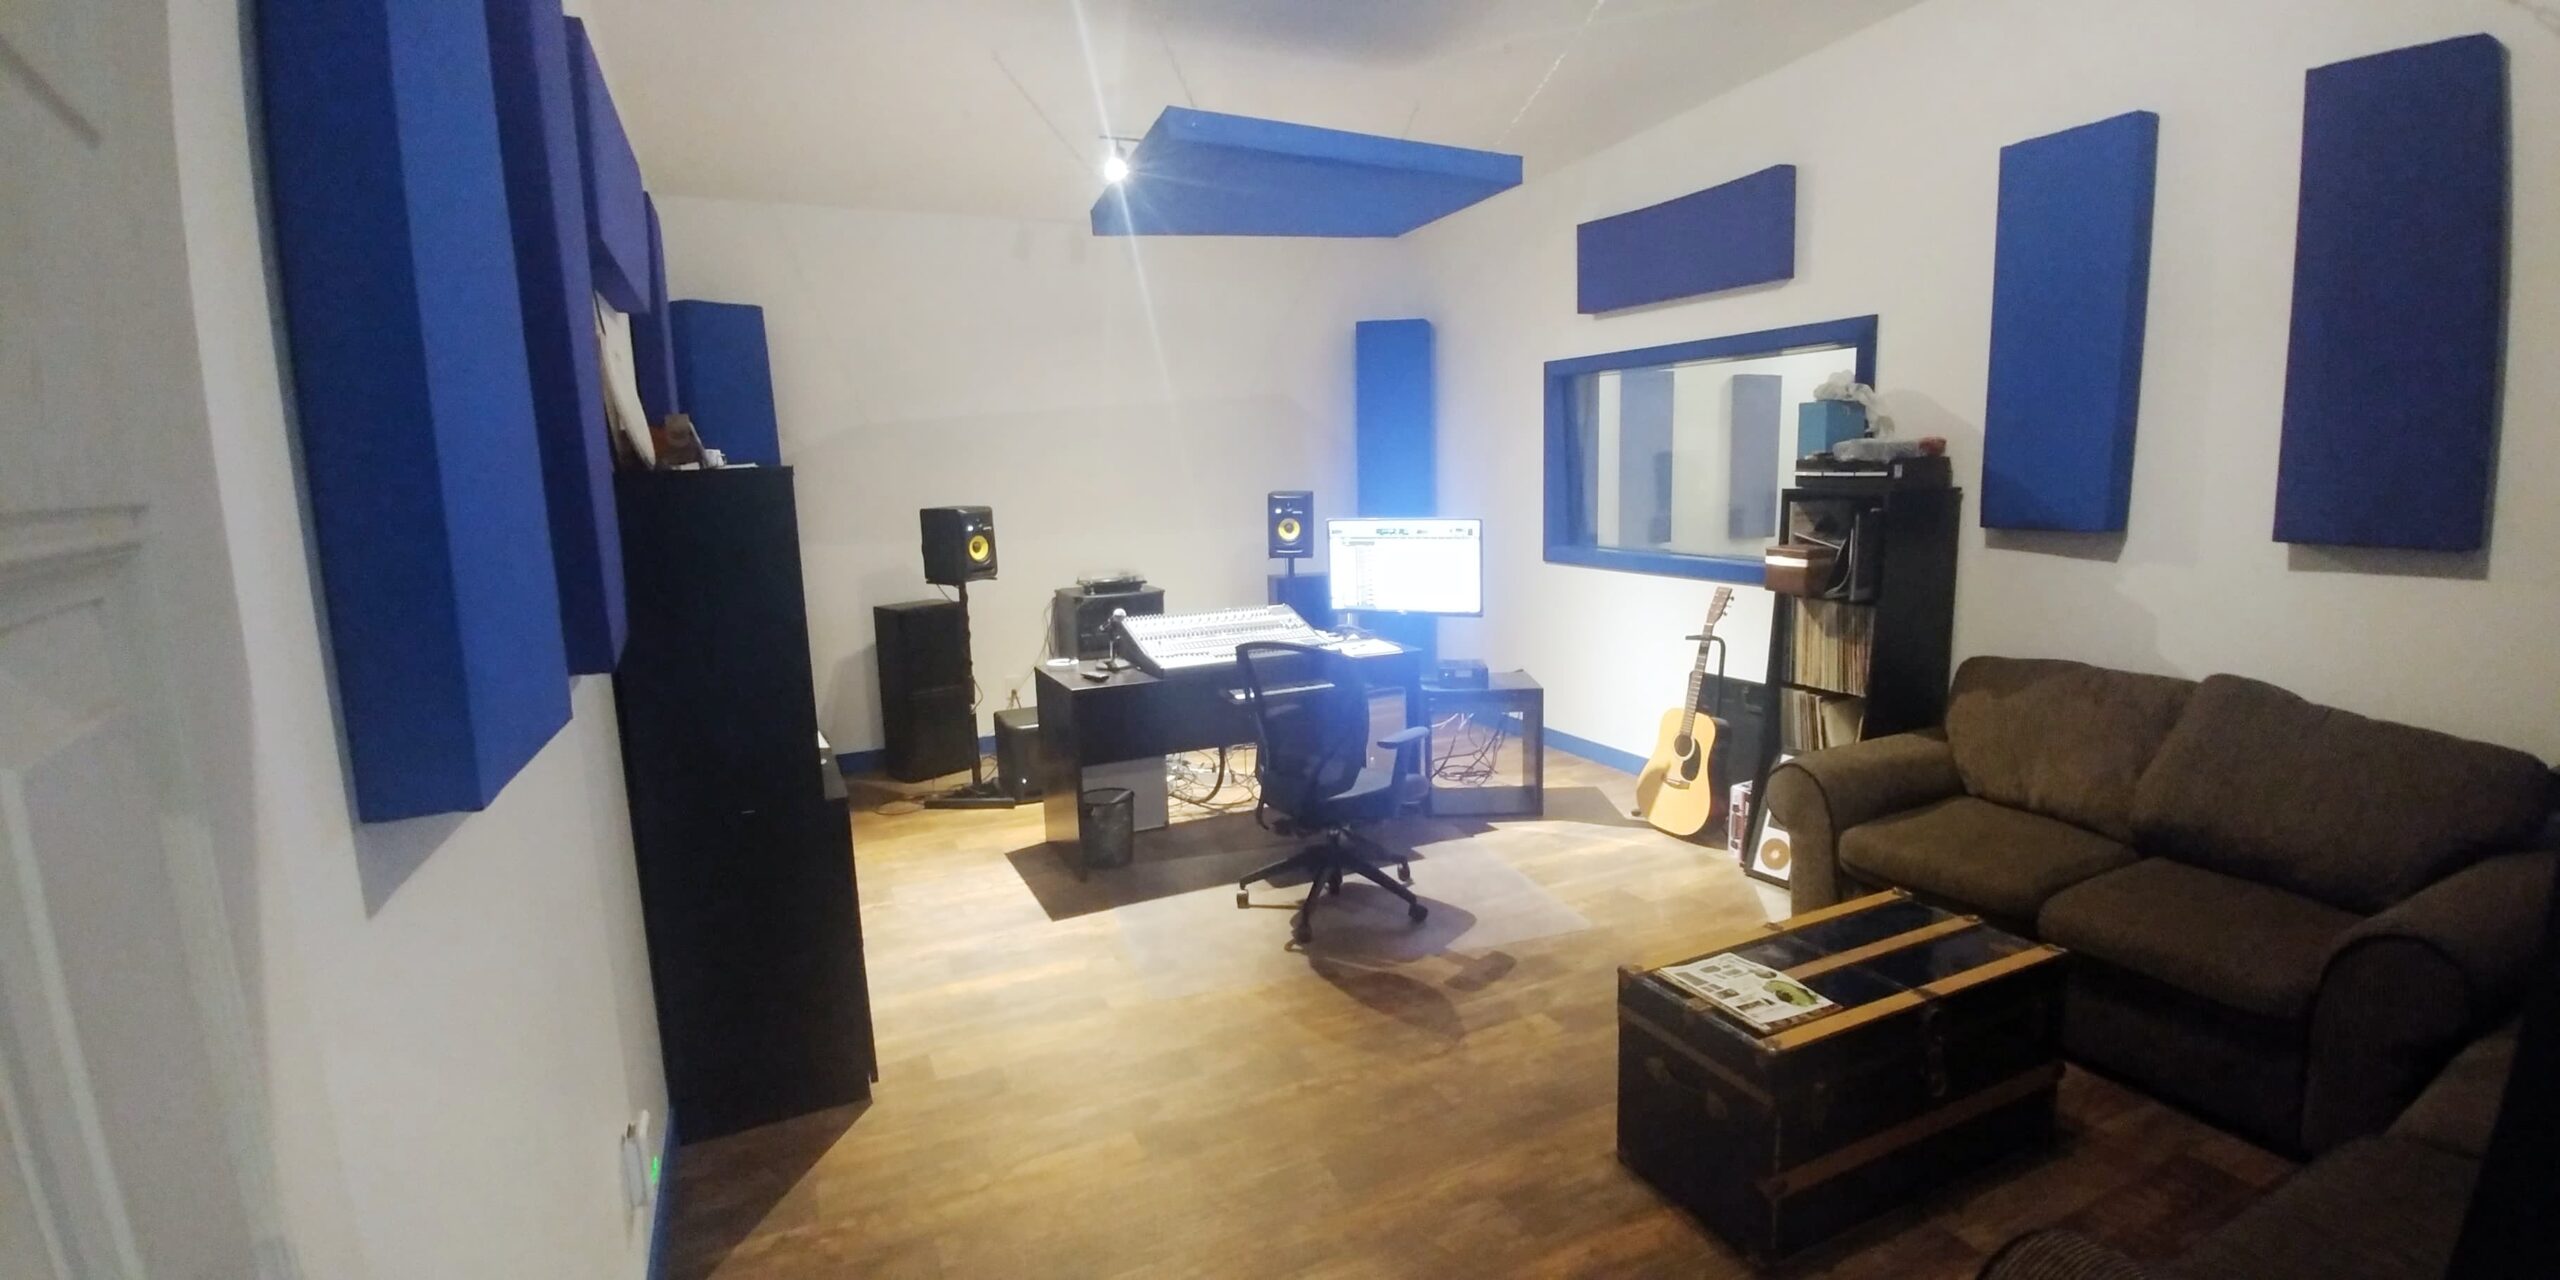 Studio 23 Control Room